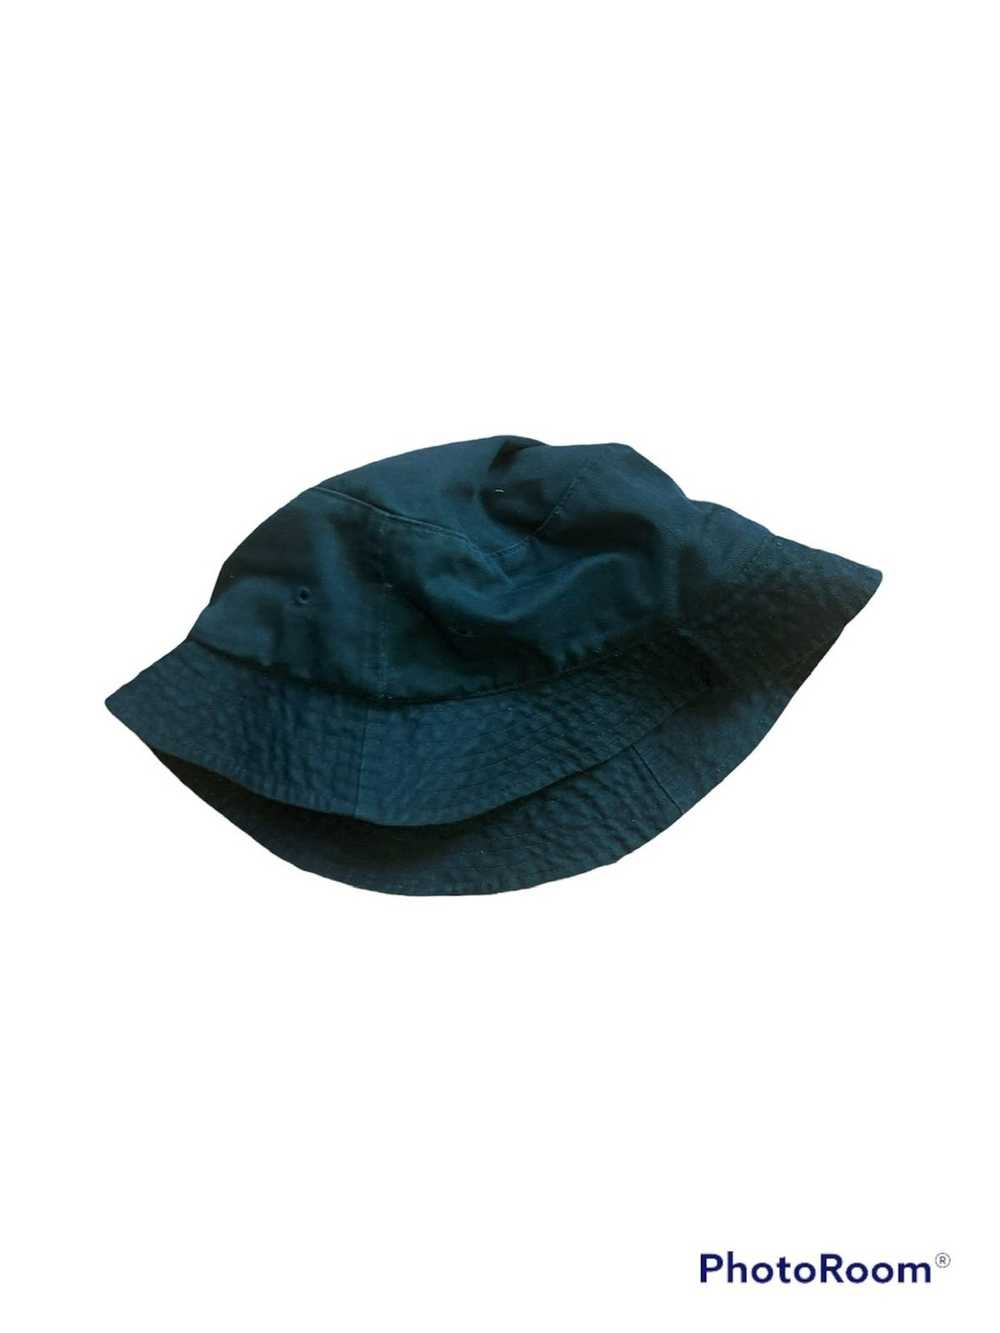 Vintage “Fishing trip” bucket hat - image 2